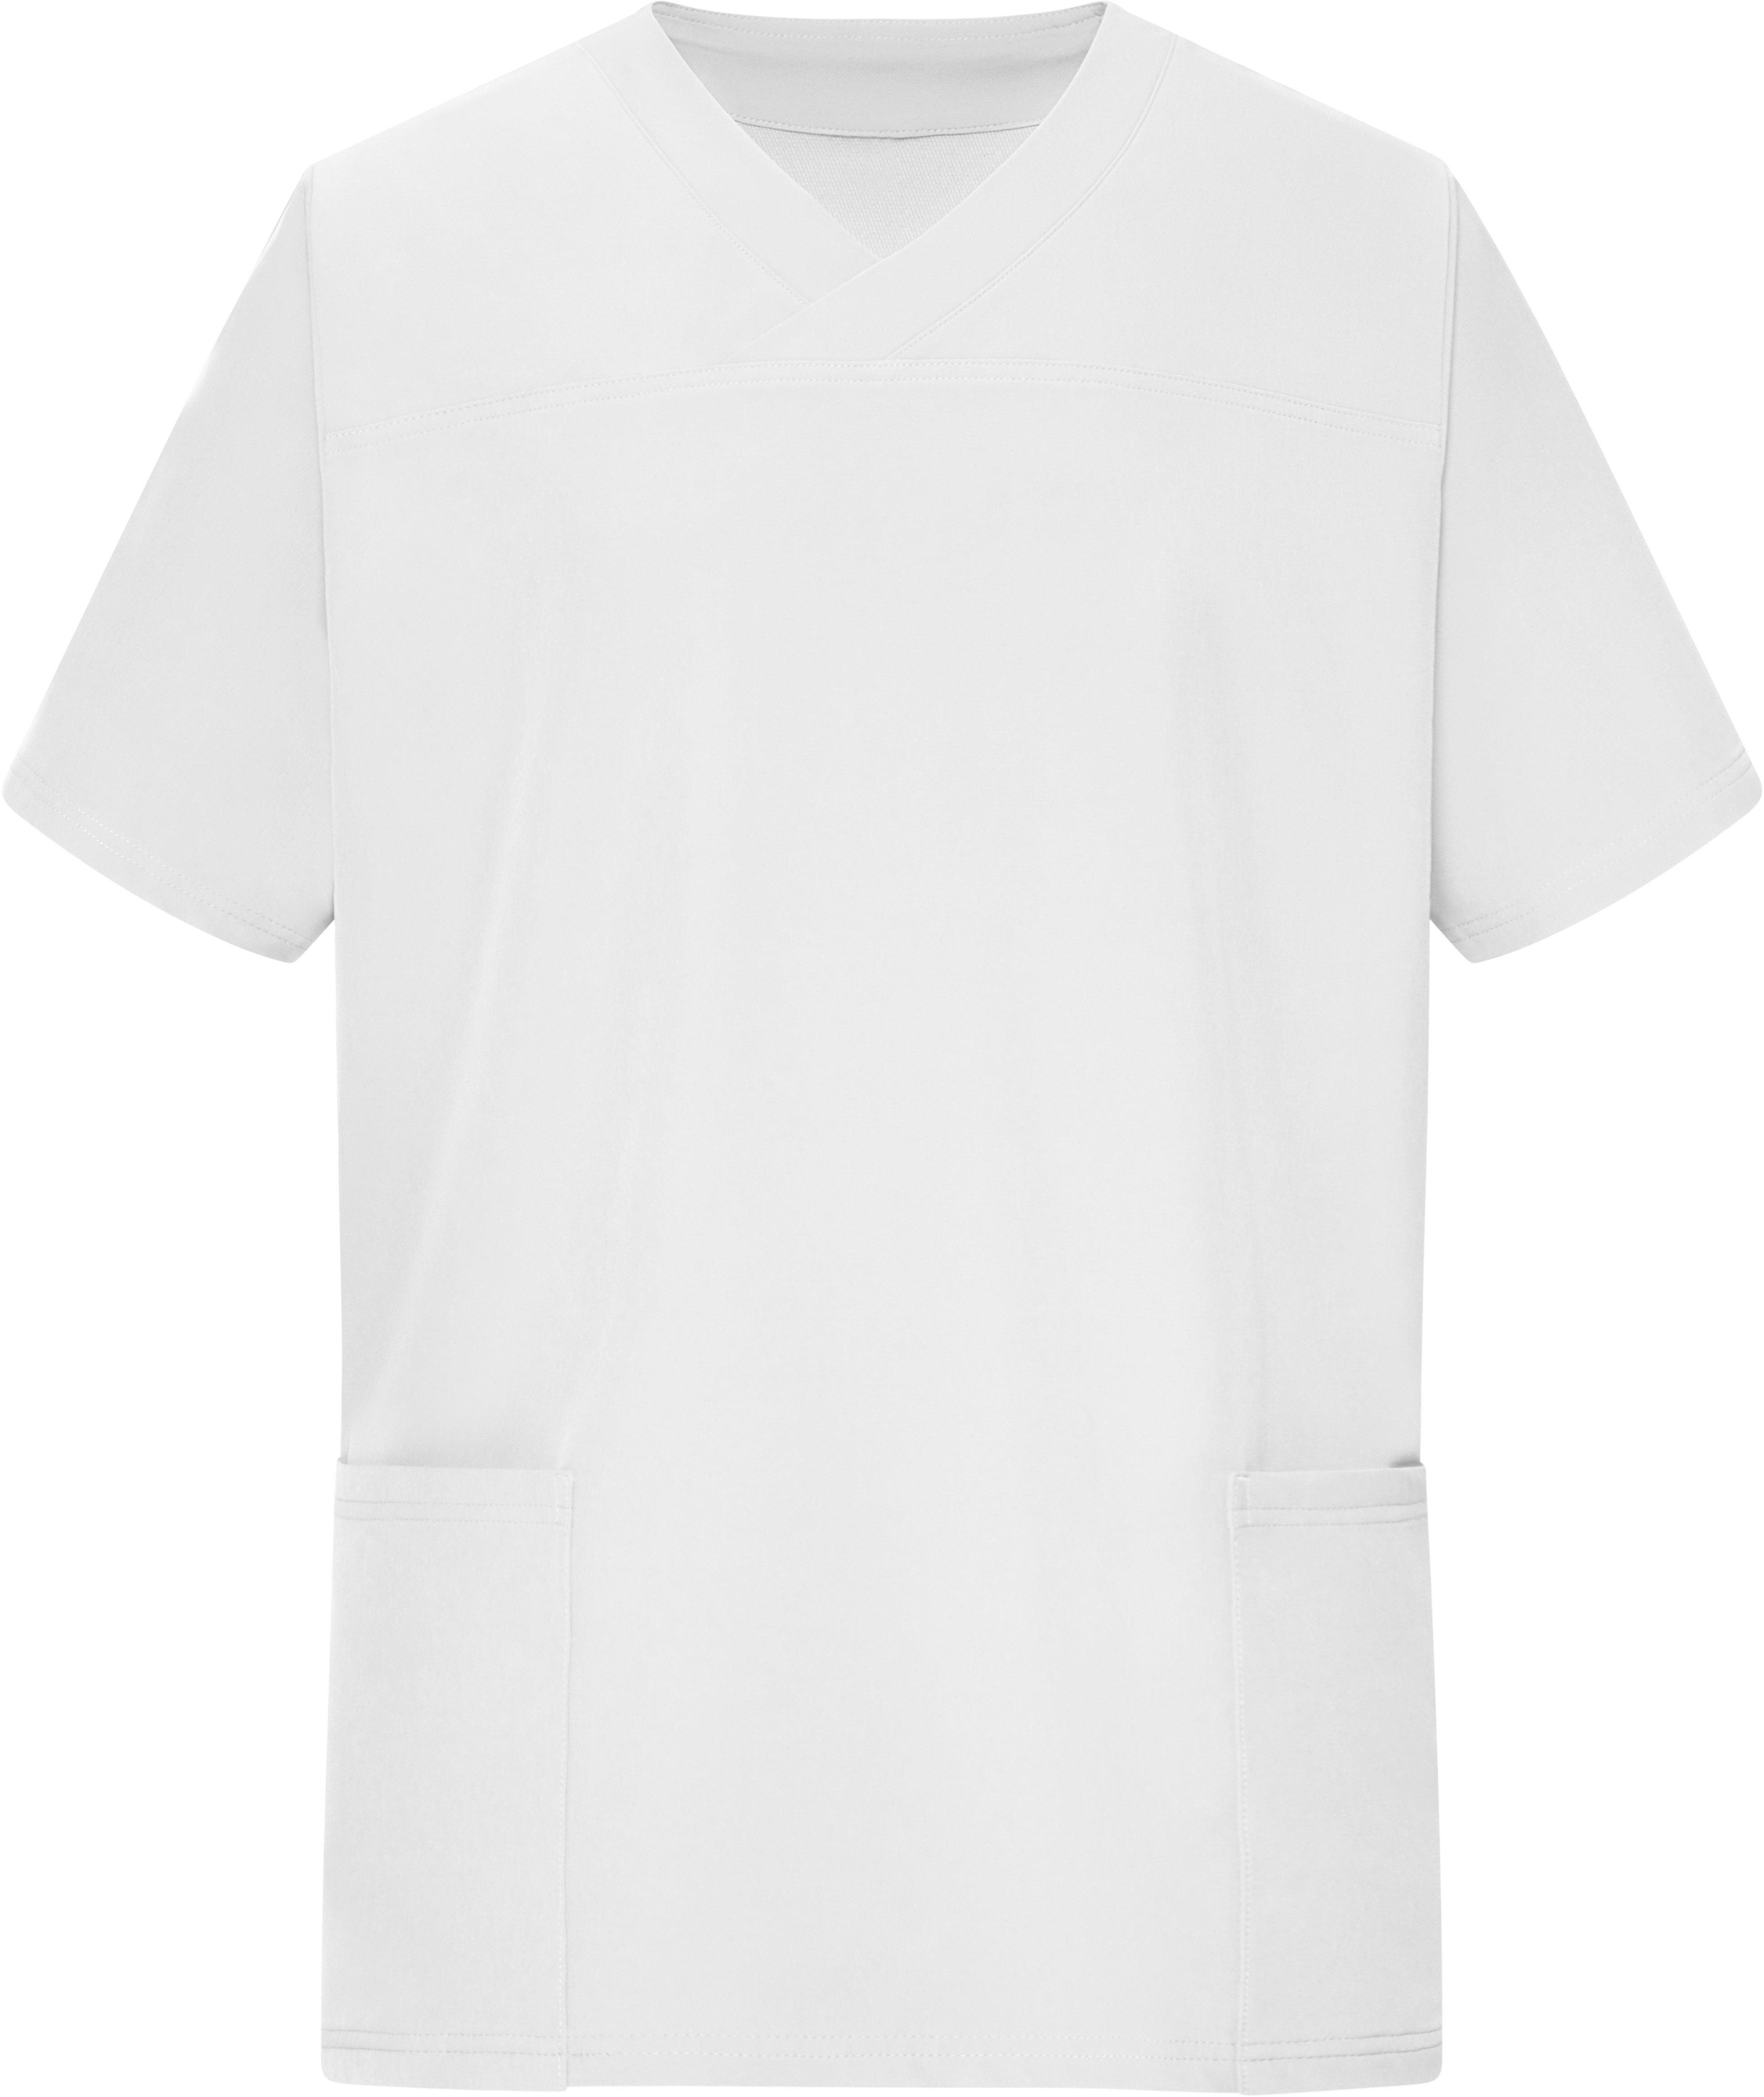 Pánská elastická tunika s výstřihem do V JN 3104 Barva: bílá, Velikost: XS